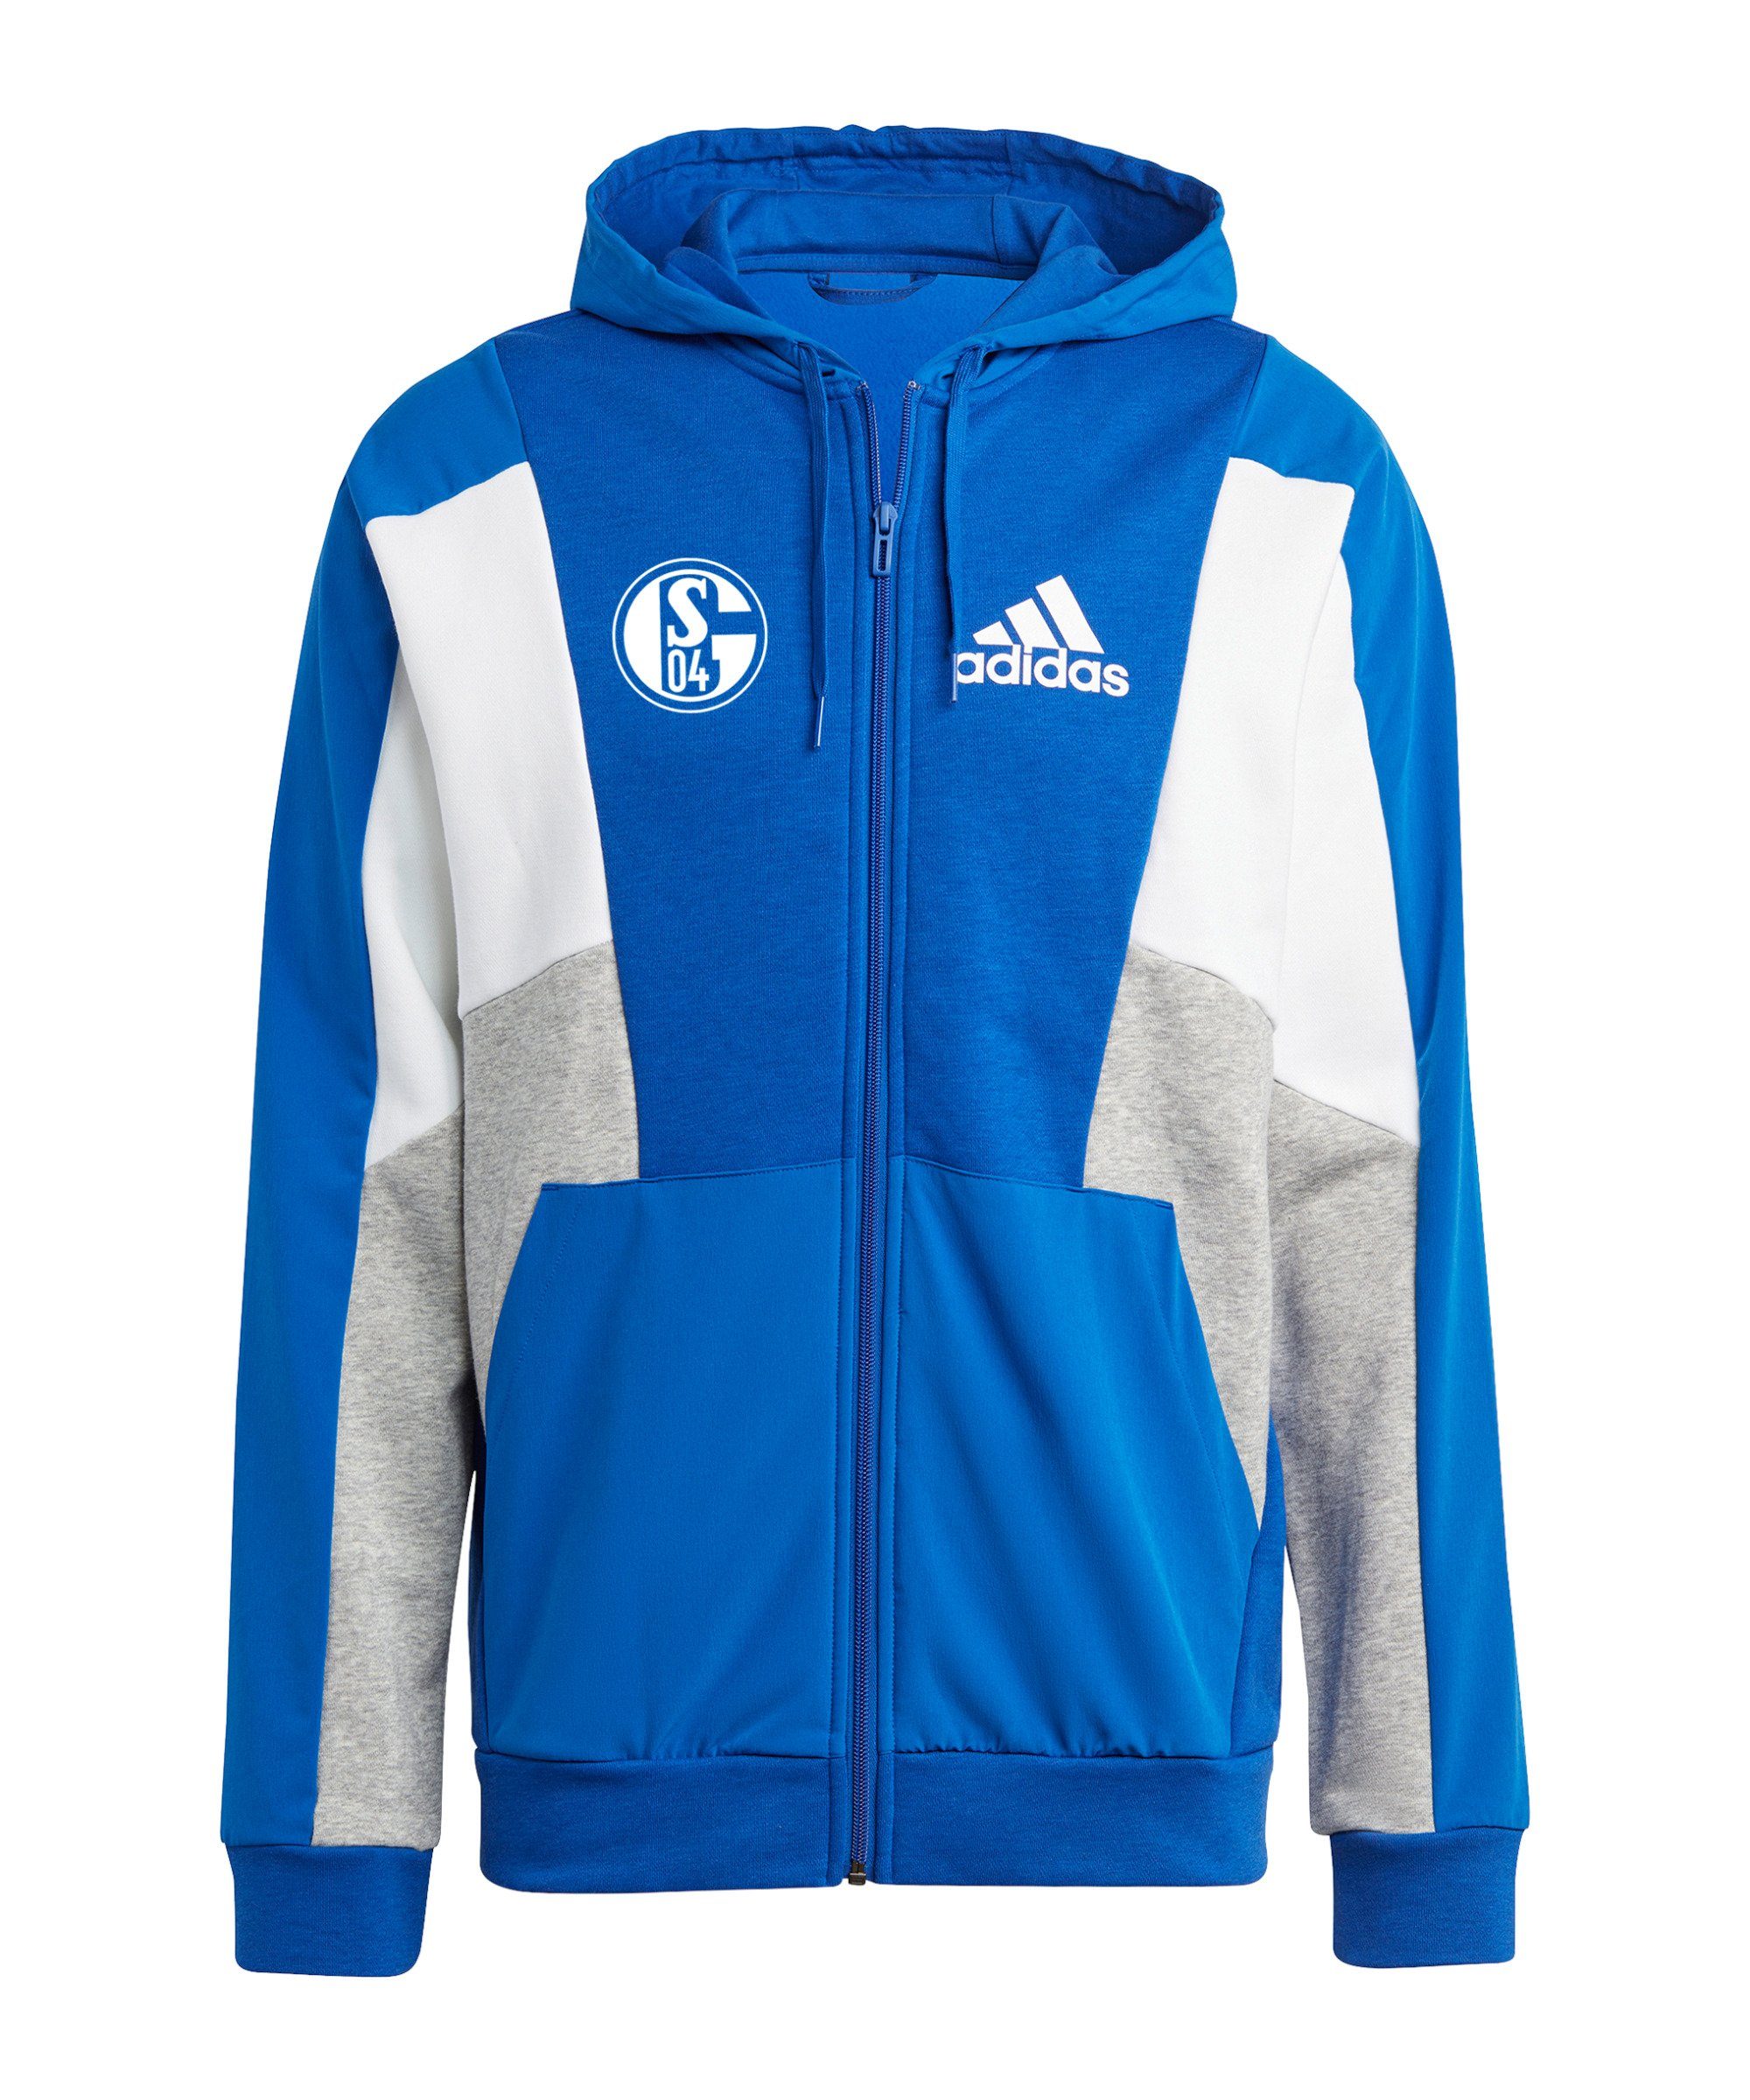 04 FC Performance Sweatjacke adidas Kapuzenjacke Schalke